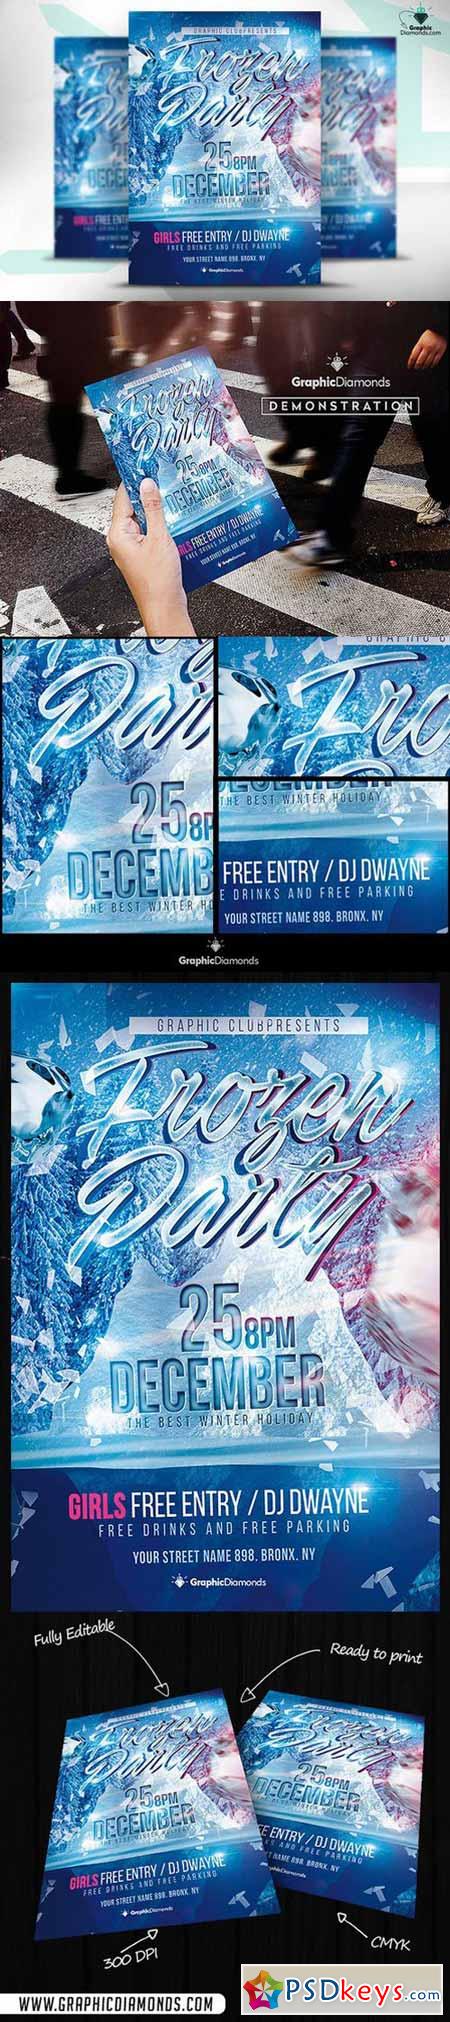 Frozen Party Flyer PSD 475955